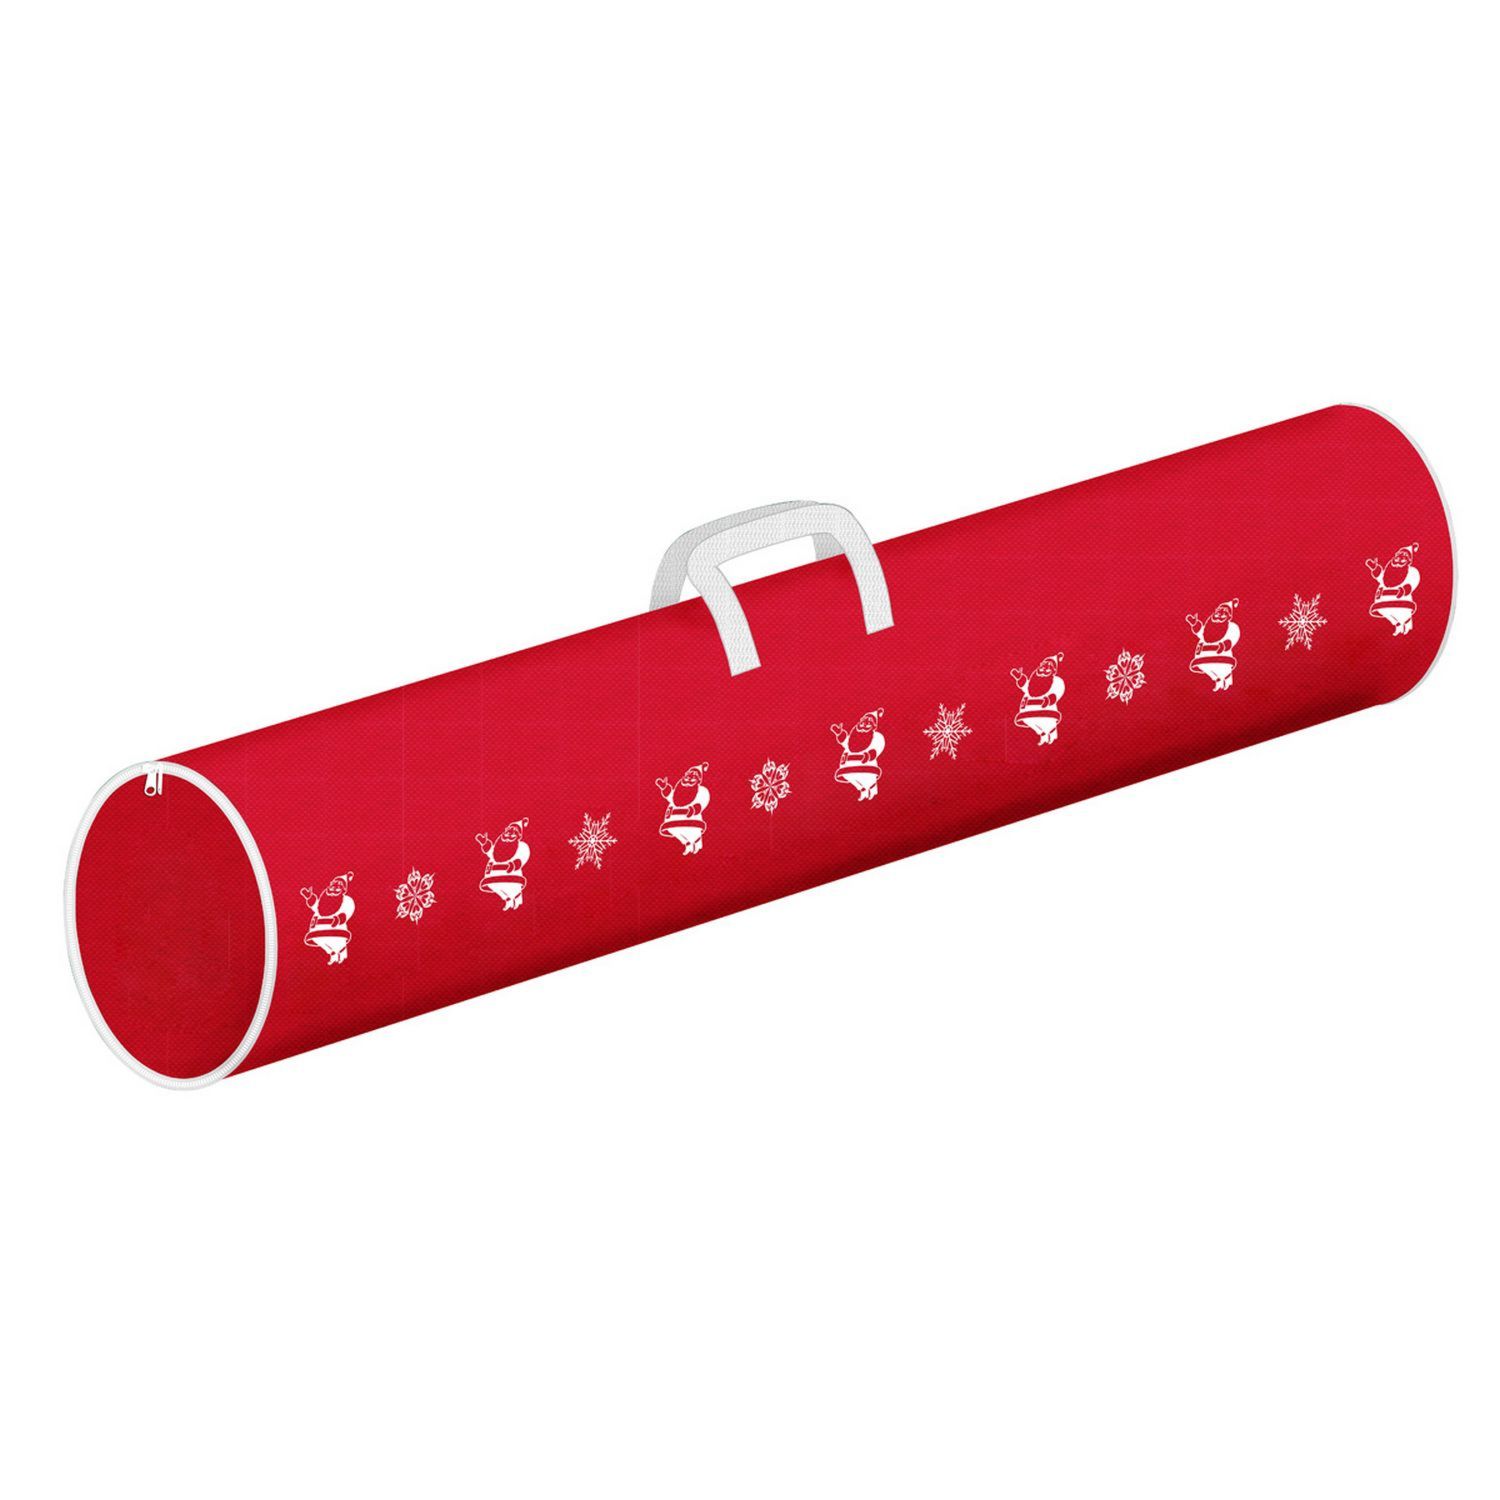 Gift Wrap Storage Tube - Red Image